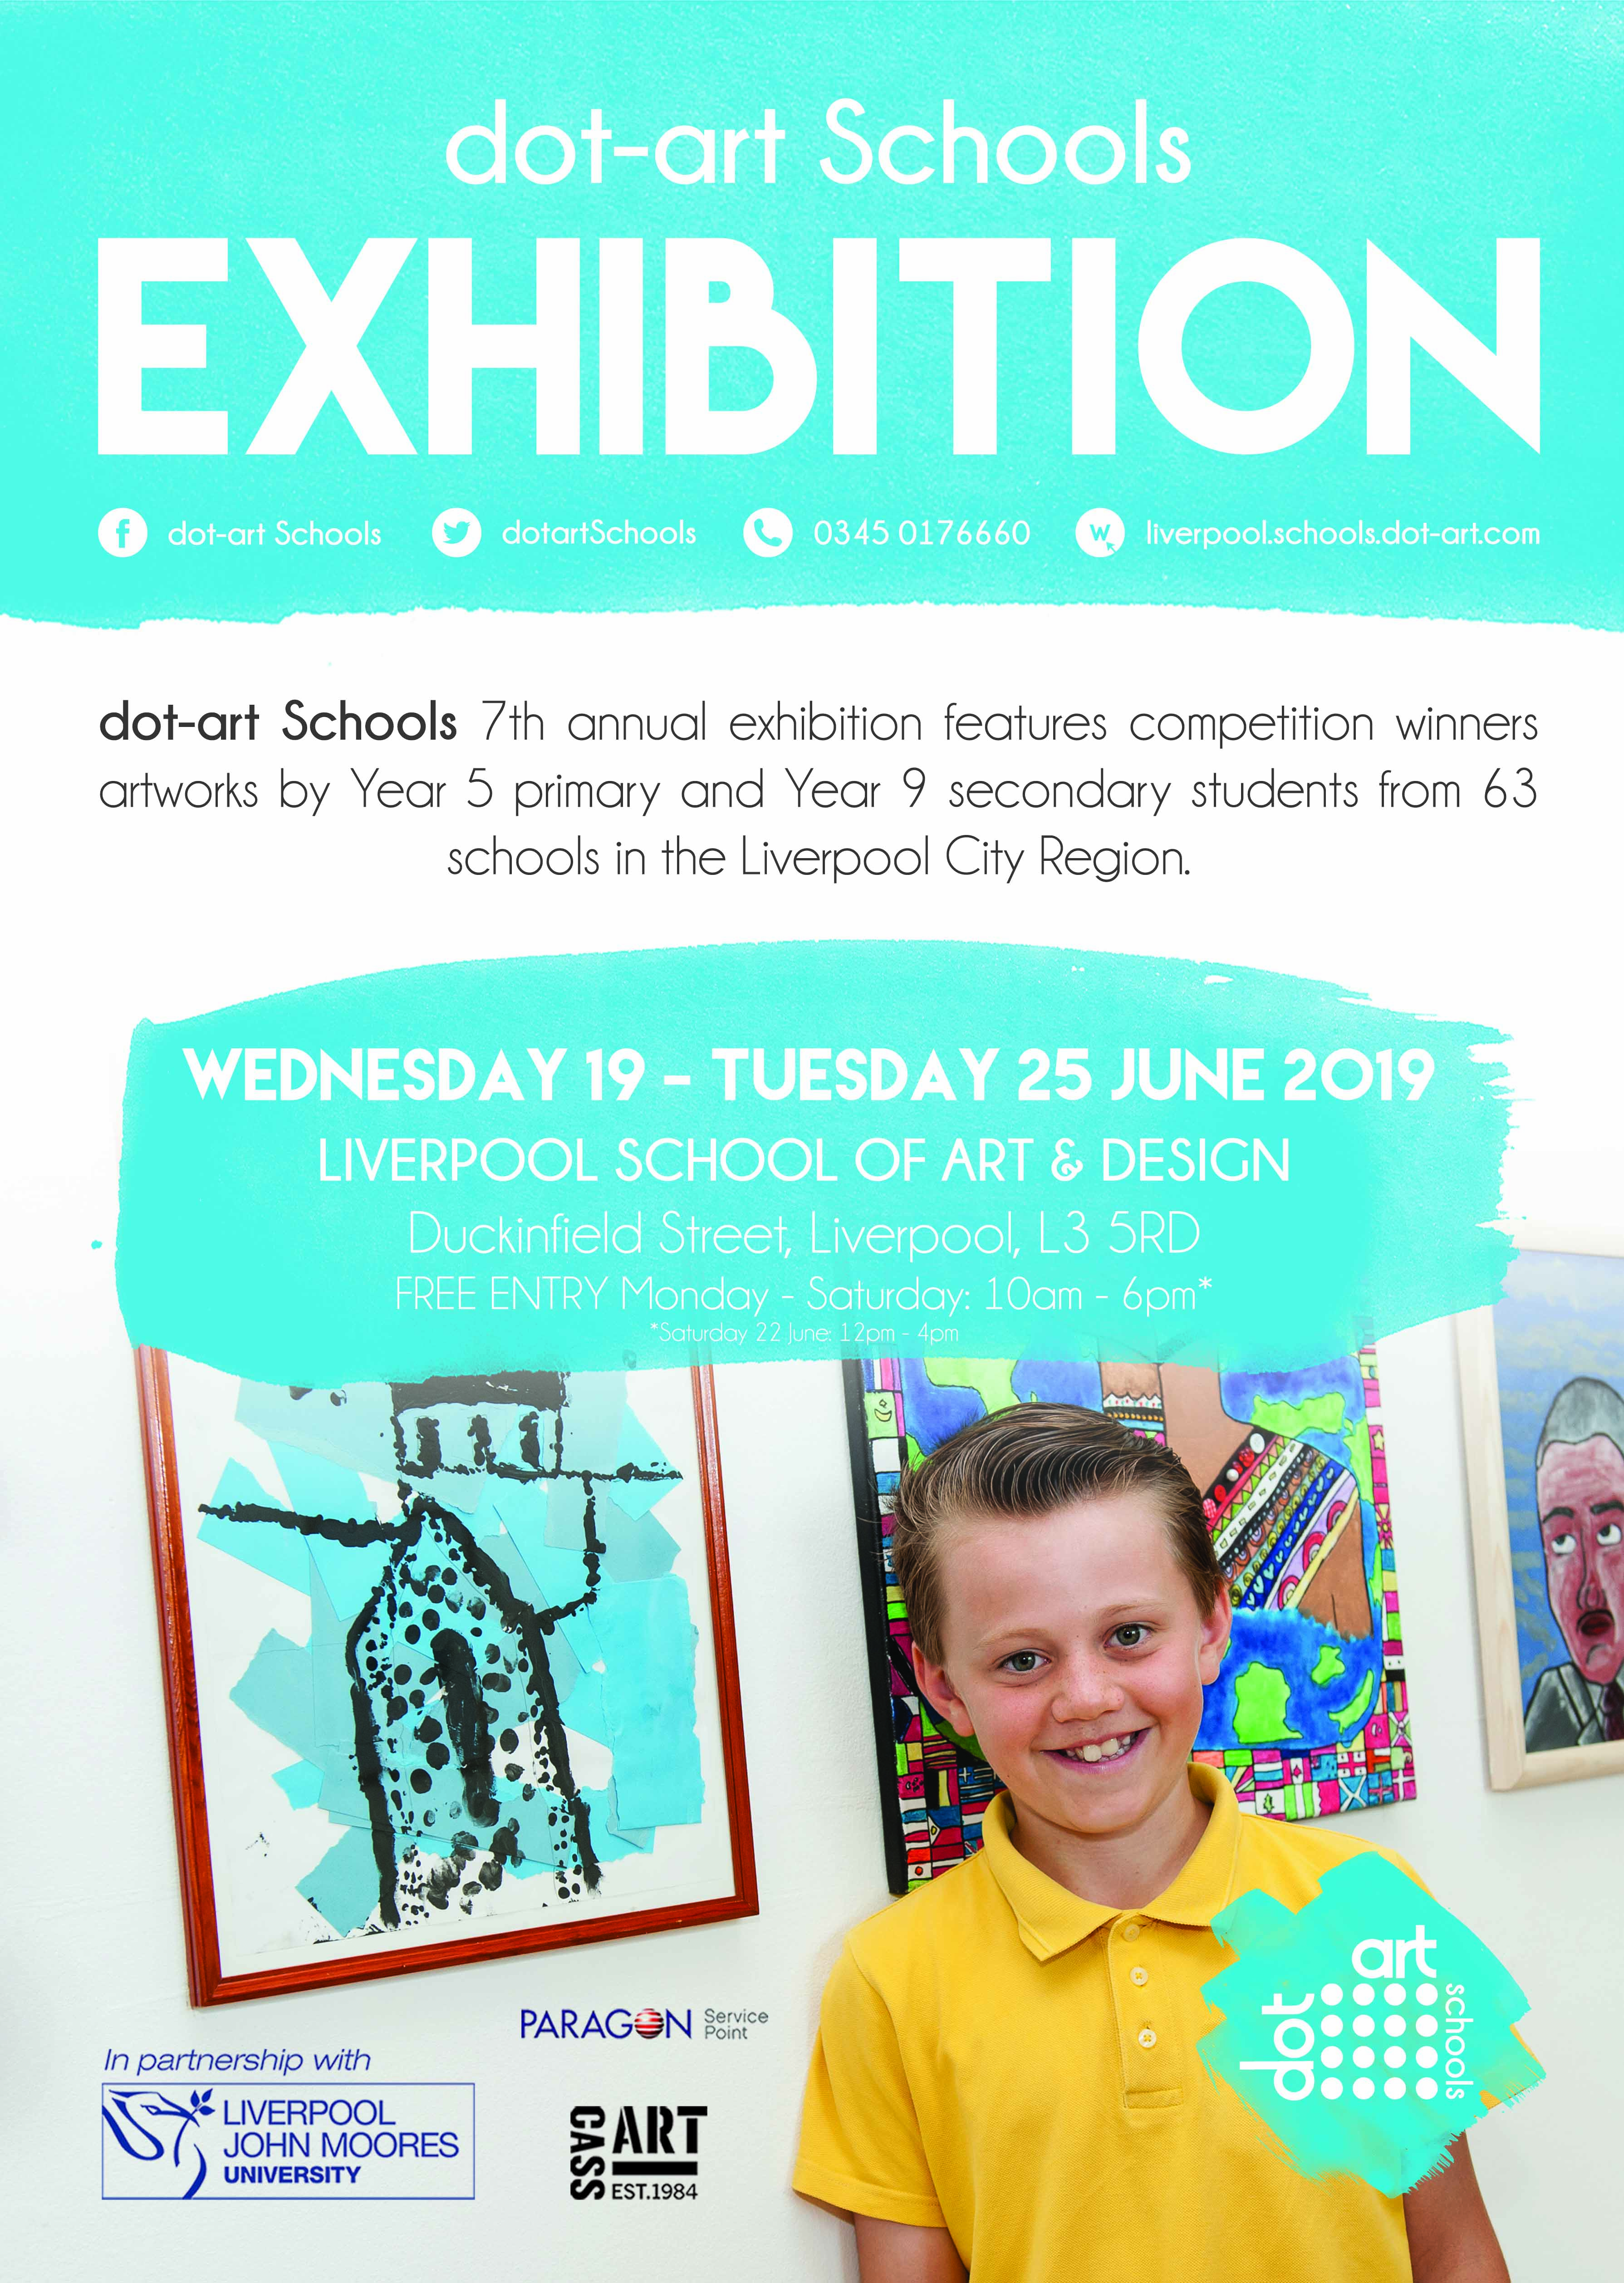 dot-art Schools Exhibition Flyer 2019